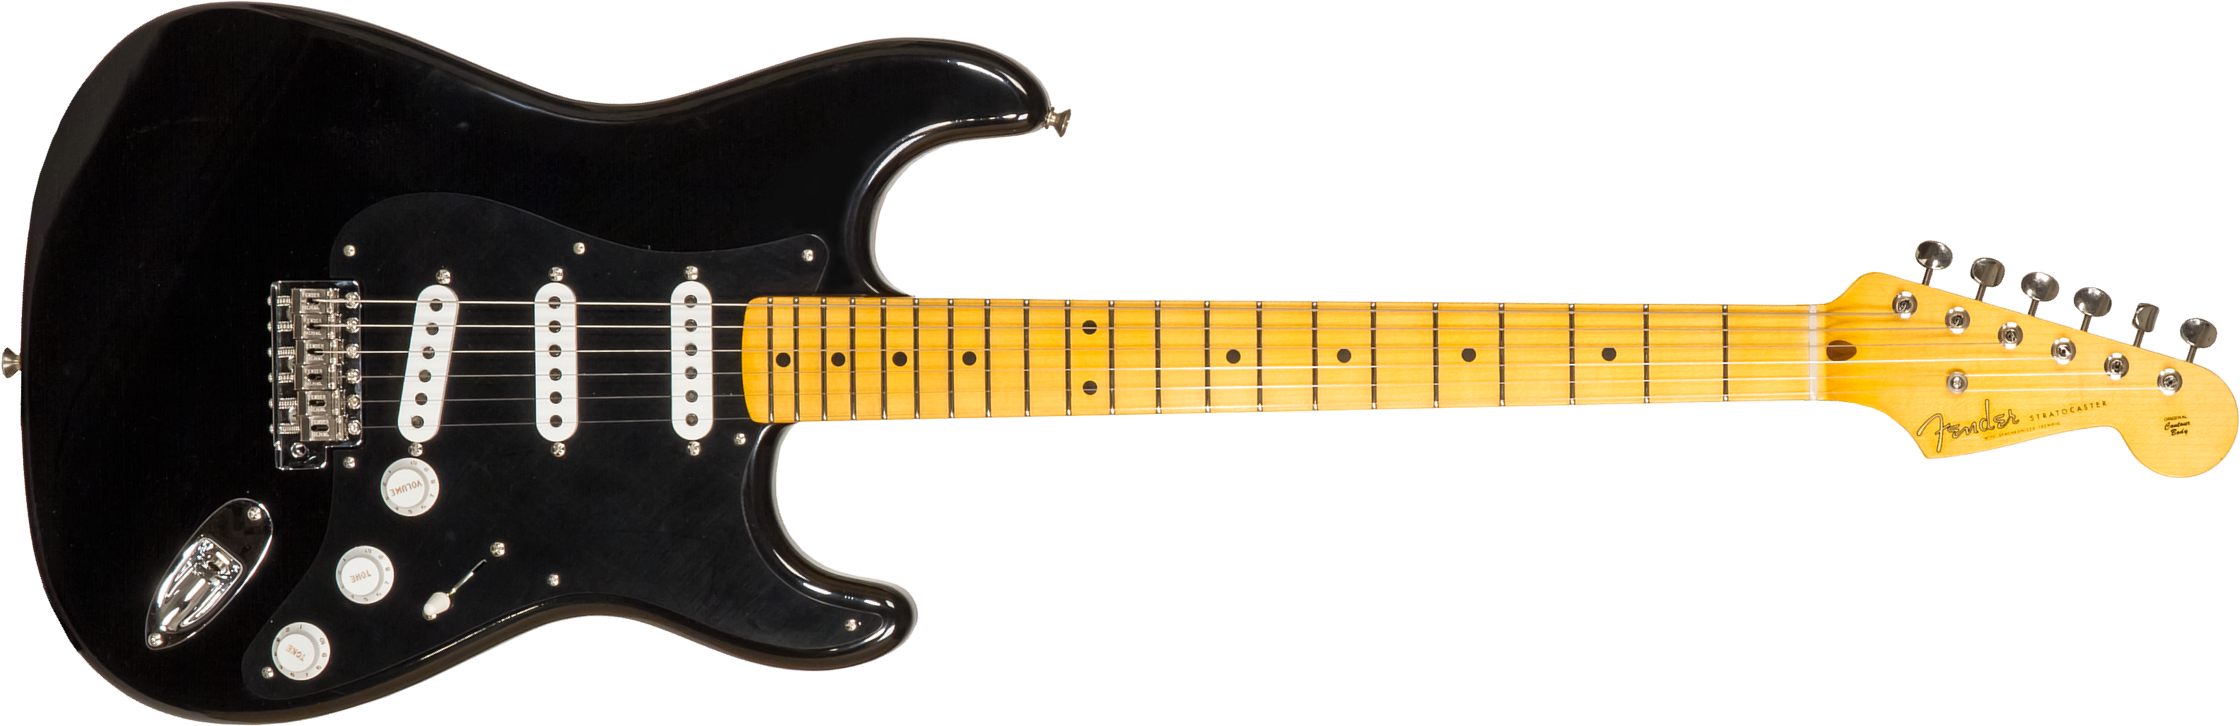 Fender Custom Shop Strat 1955 3s Trem Mn #r127877 - Closet Classic Black - Guitarra eléctrica con forma de str. - Main picture